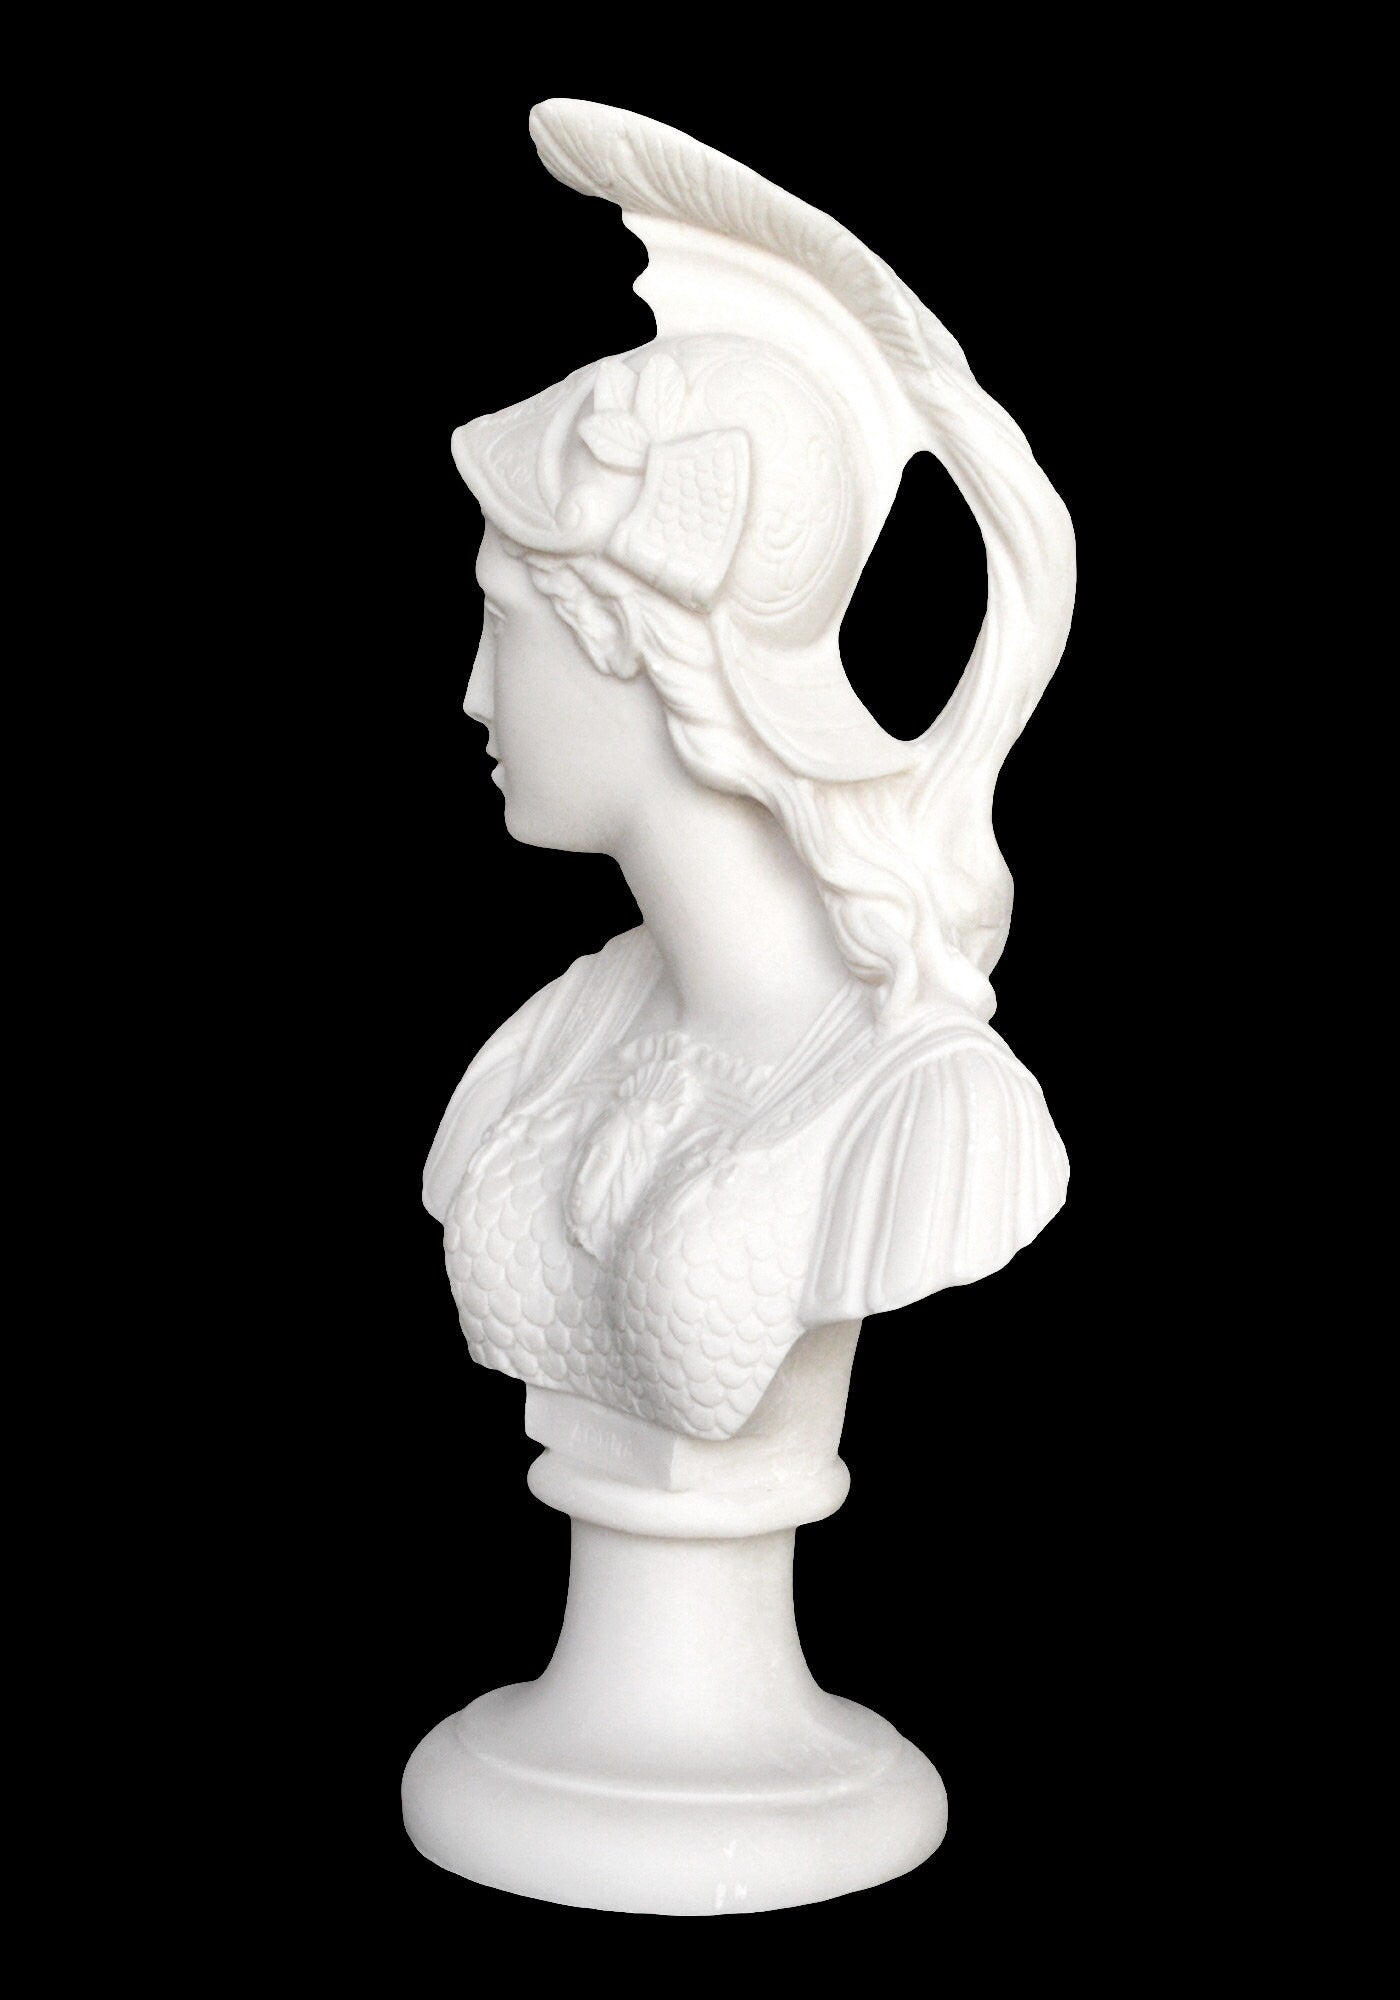 Athena Minerva Bust - Greek Roman Goddes of Wisdom, Strength, Strategy, Courage, Inspiration, Arts, Crafts, and Skill - Alabaster Sculpture